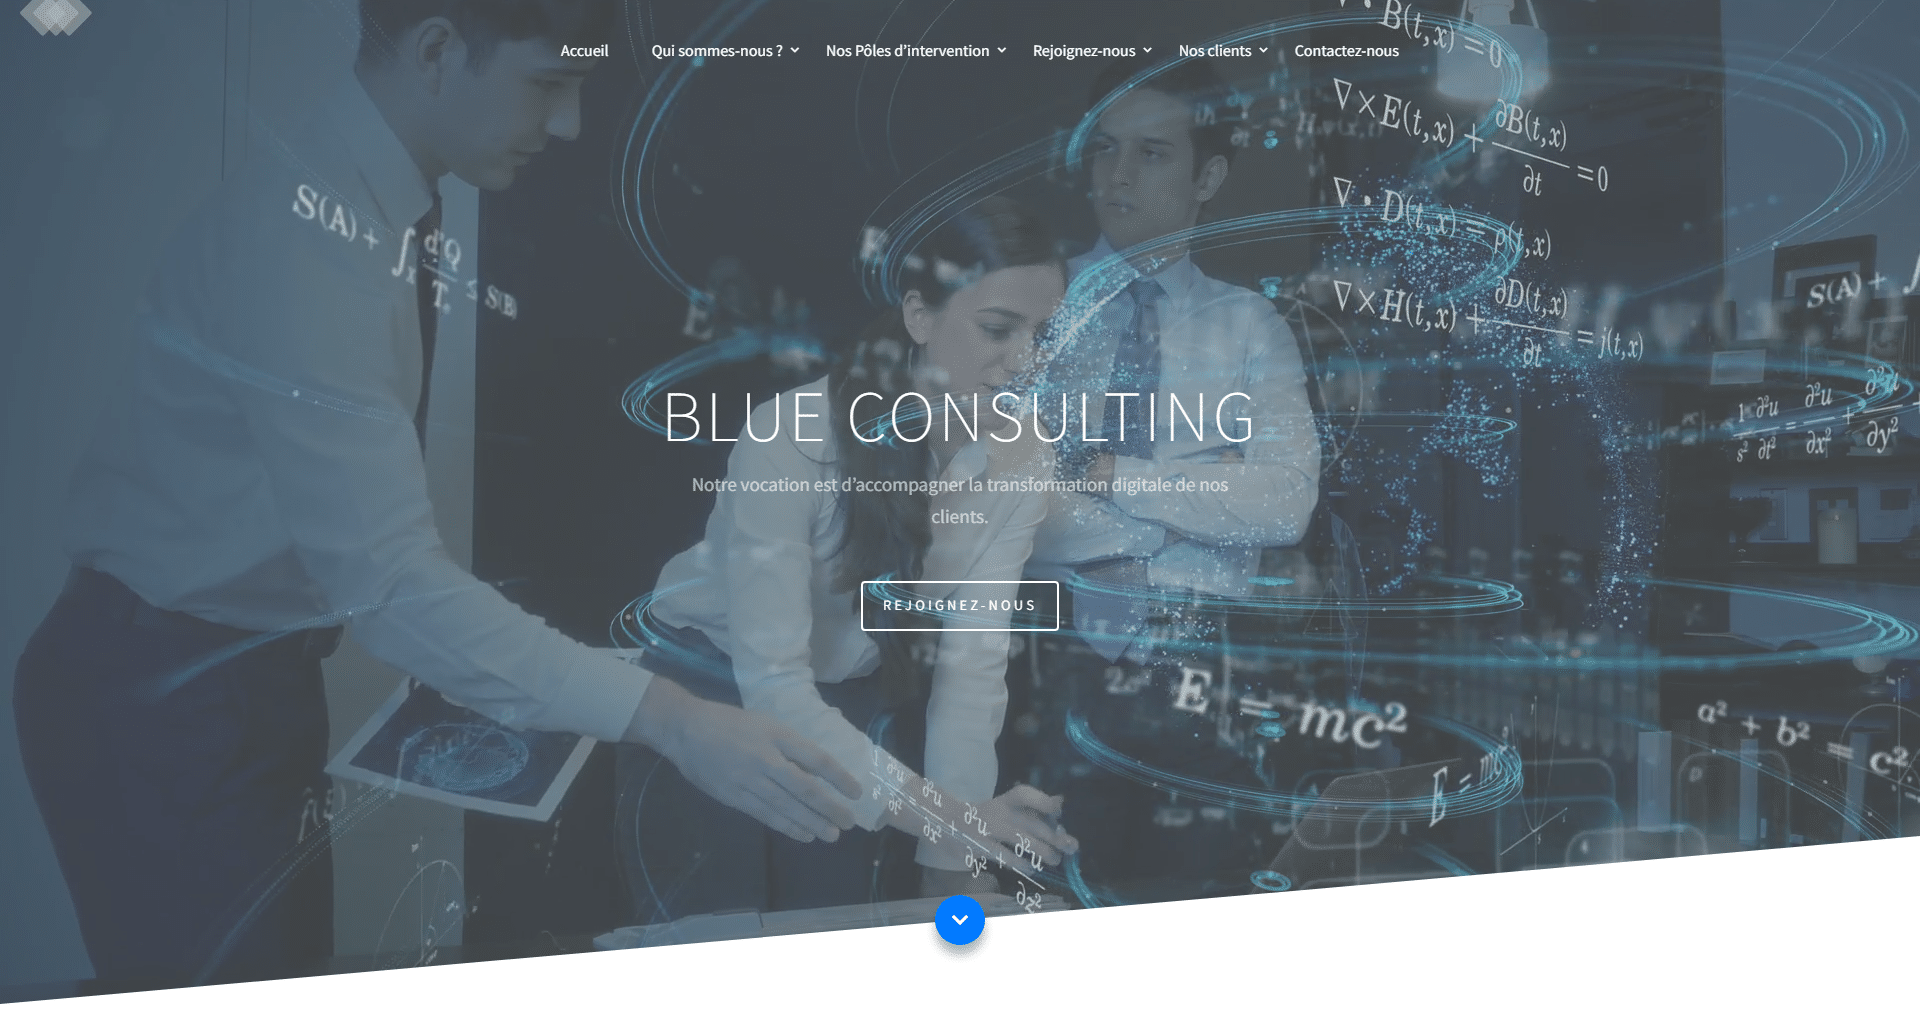 blue consulting.com Accueil.htmlDesktop displays